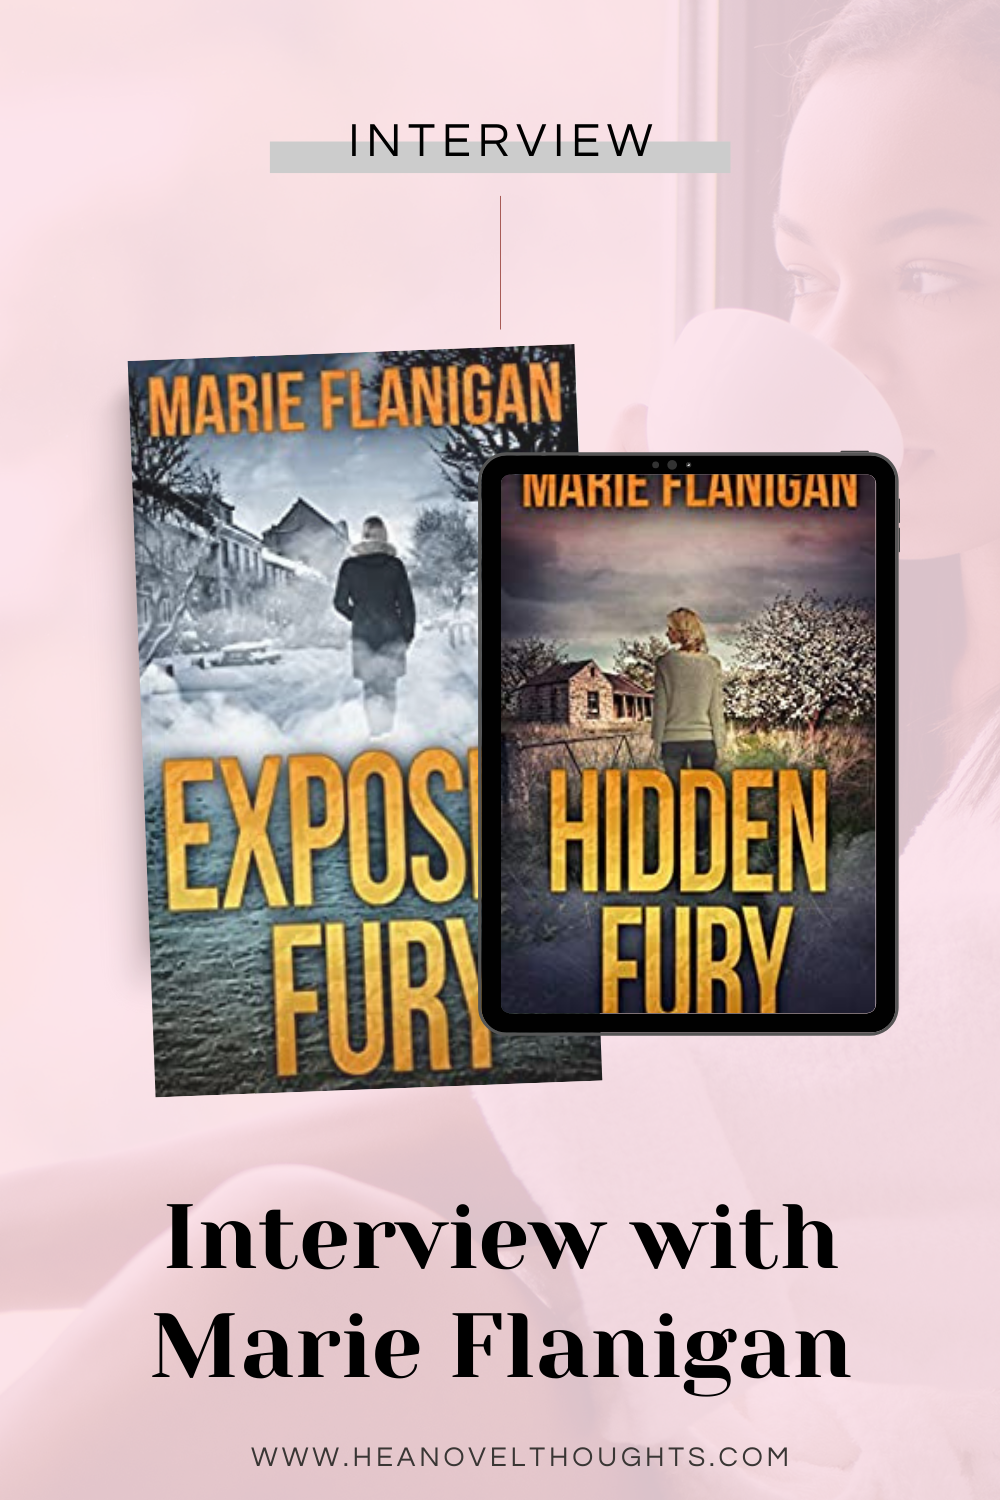 Meet Author Marie Flanigan